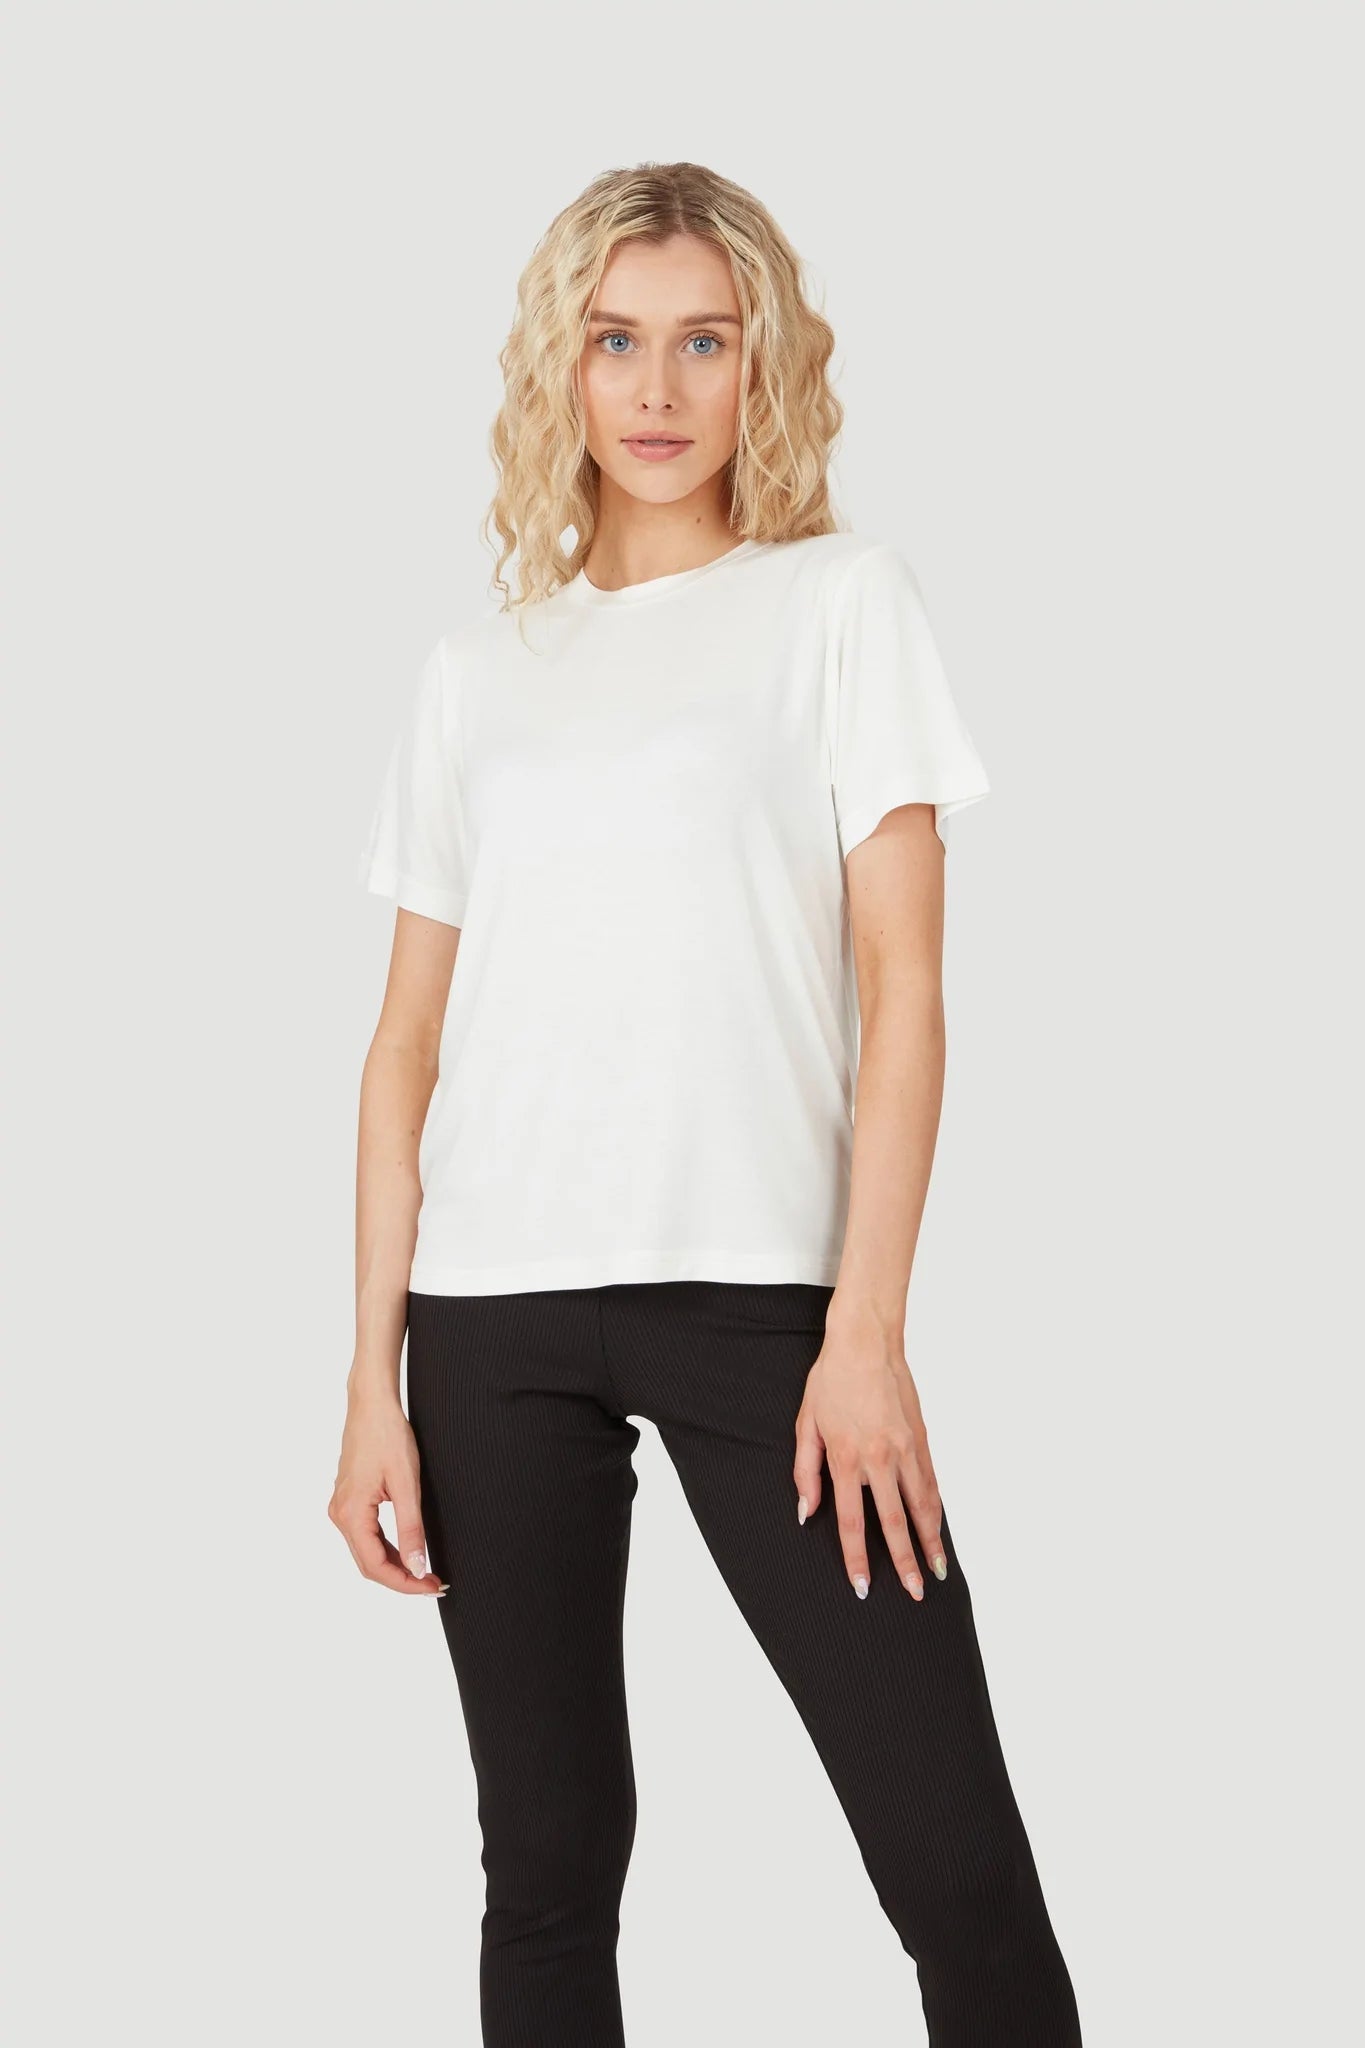 Form & Grace Standard T-shirt Black & Ivory - Women's T-Shirts & Shirts - British D'sire